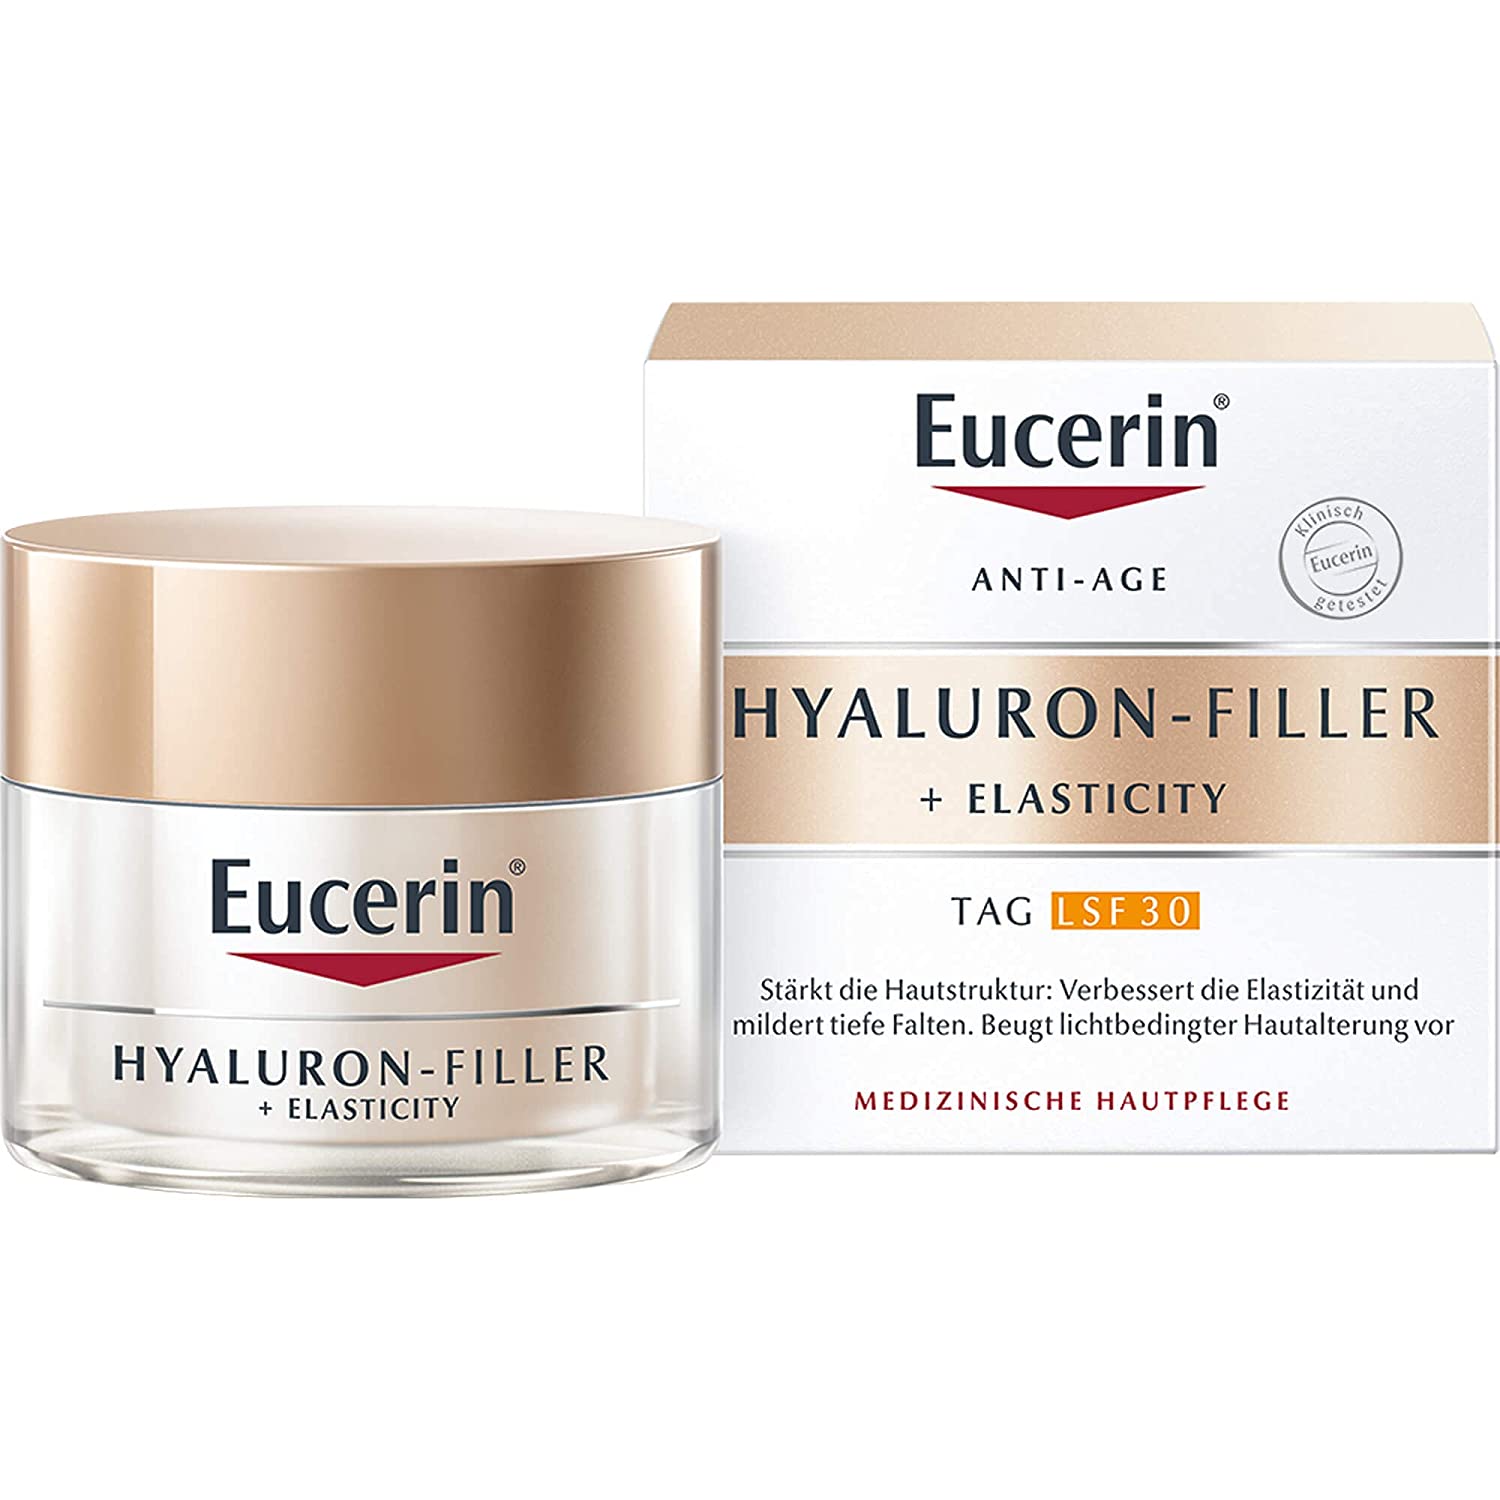 Eucerin Anti-Age Hyaluronic Filler + Elasticity Tag SPF30, 50ml Cream